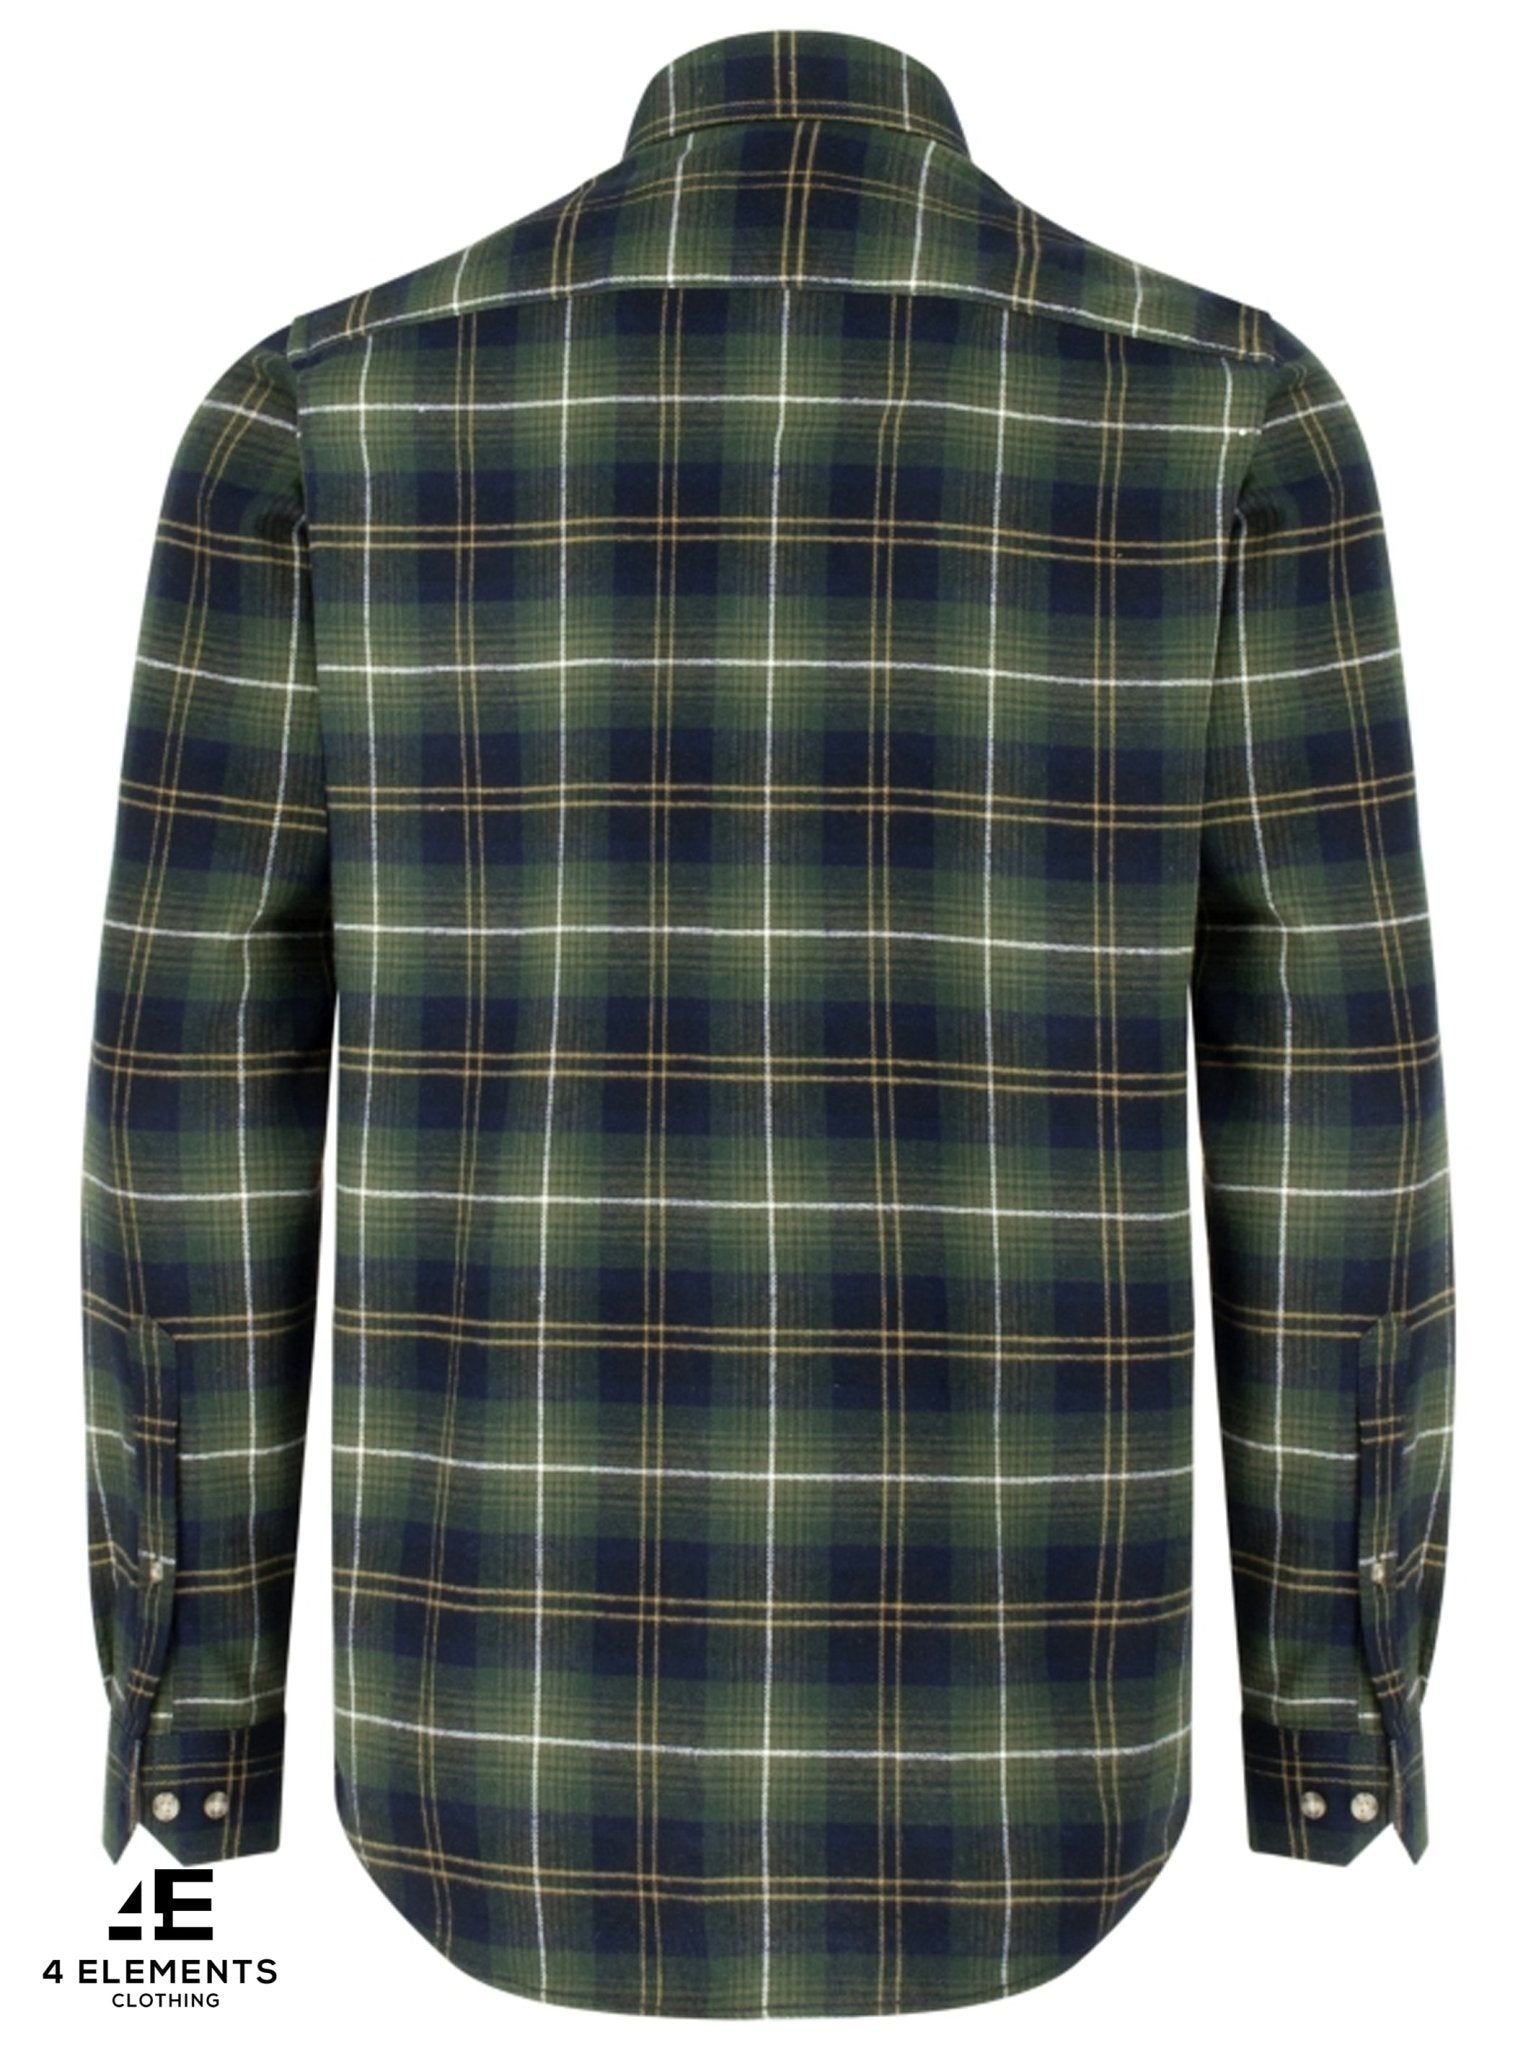 4elementsclothingHoggs of FifeHoggs of Fife - Mens Shirt, Long Sleeve Flannel Check Shirt - Pitmedden Country shirtShirtPITM/RU/1